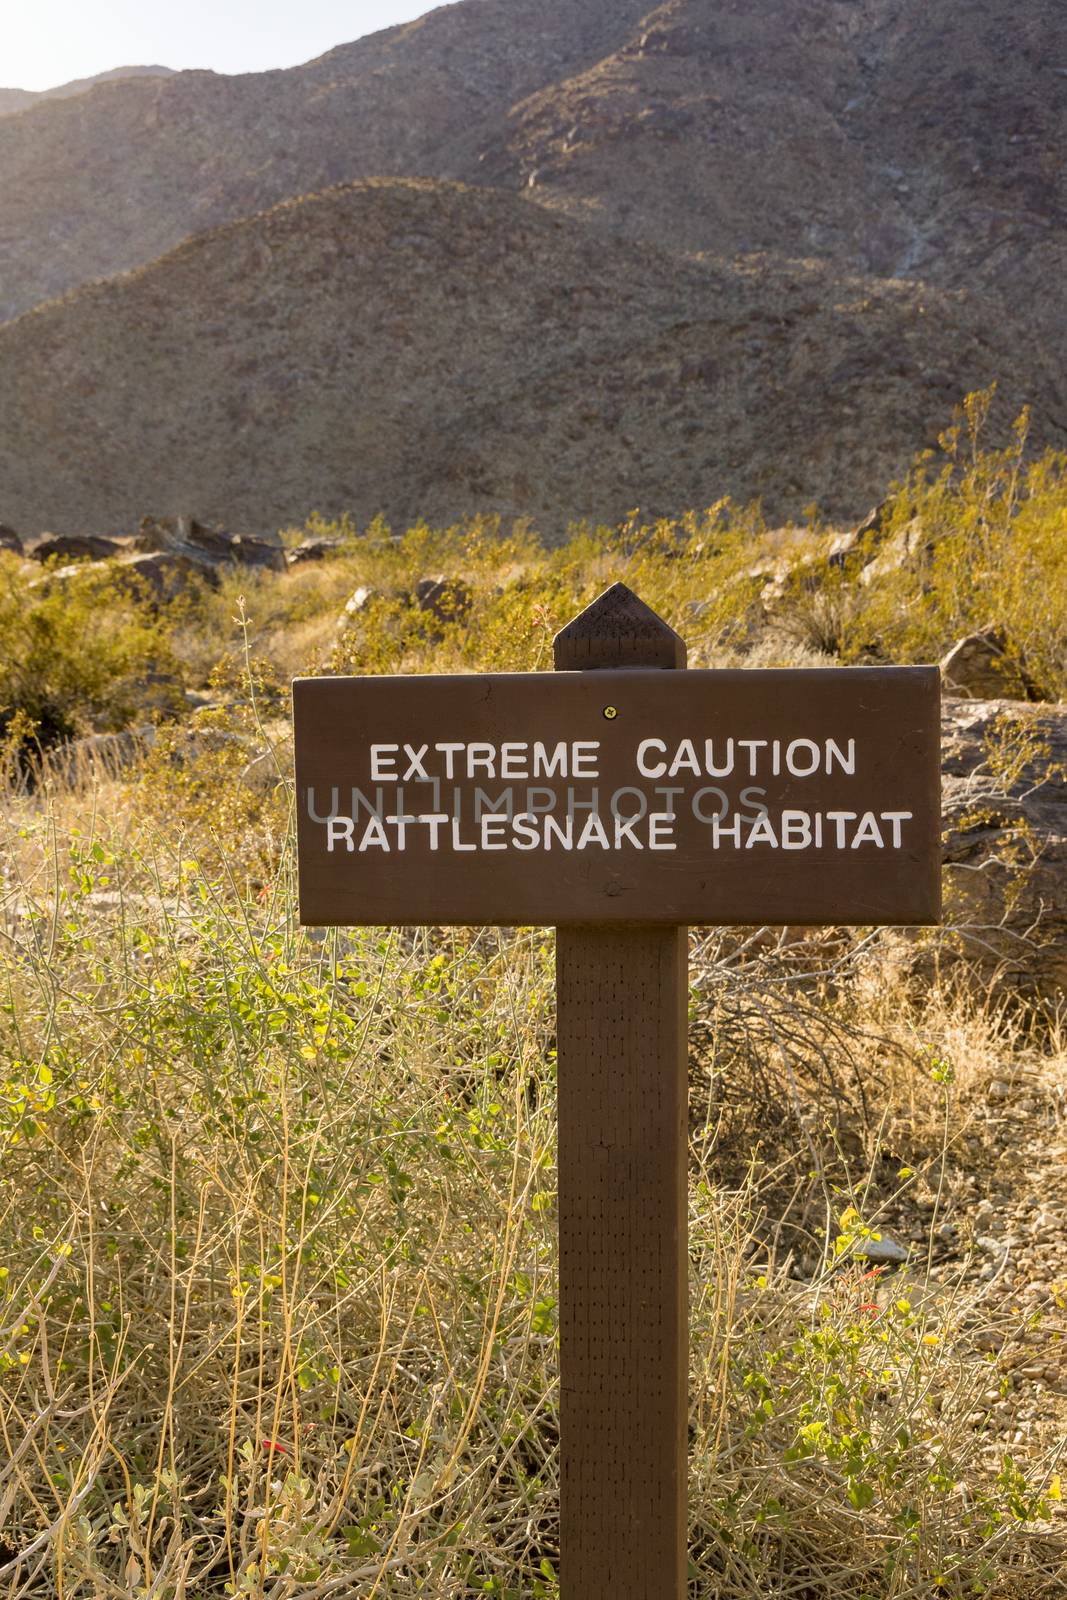 Sign marking rattlesnake habitat in the arid region of southern California.